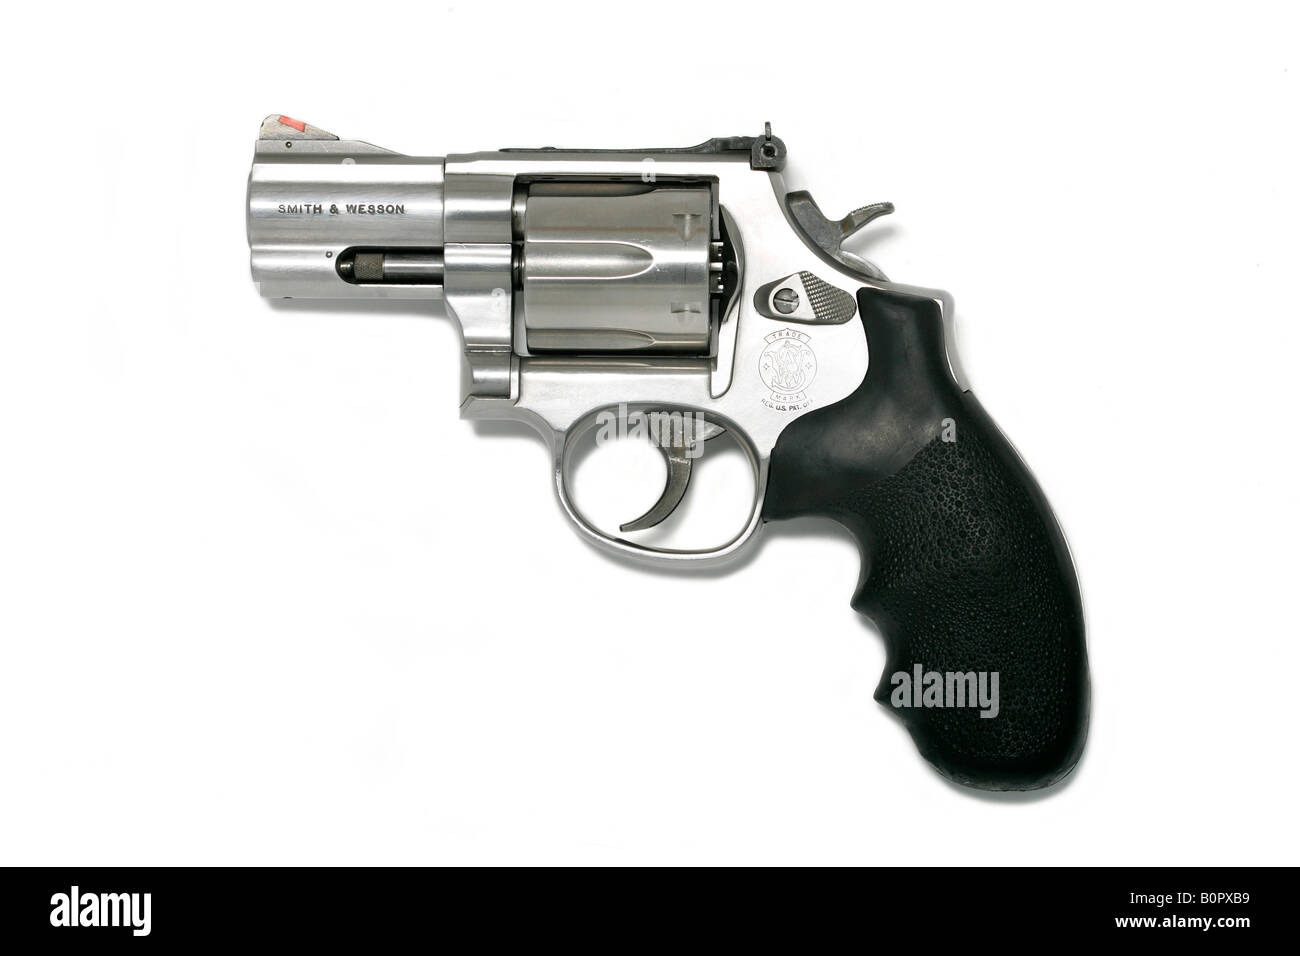 Smith & Wesson SW 686 Pistole Pistole Handpistole Stockfoto